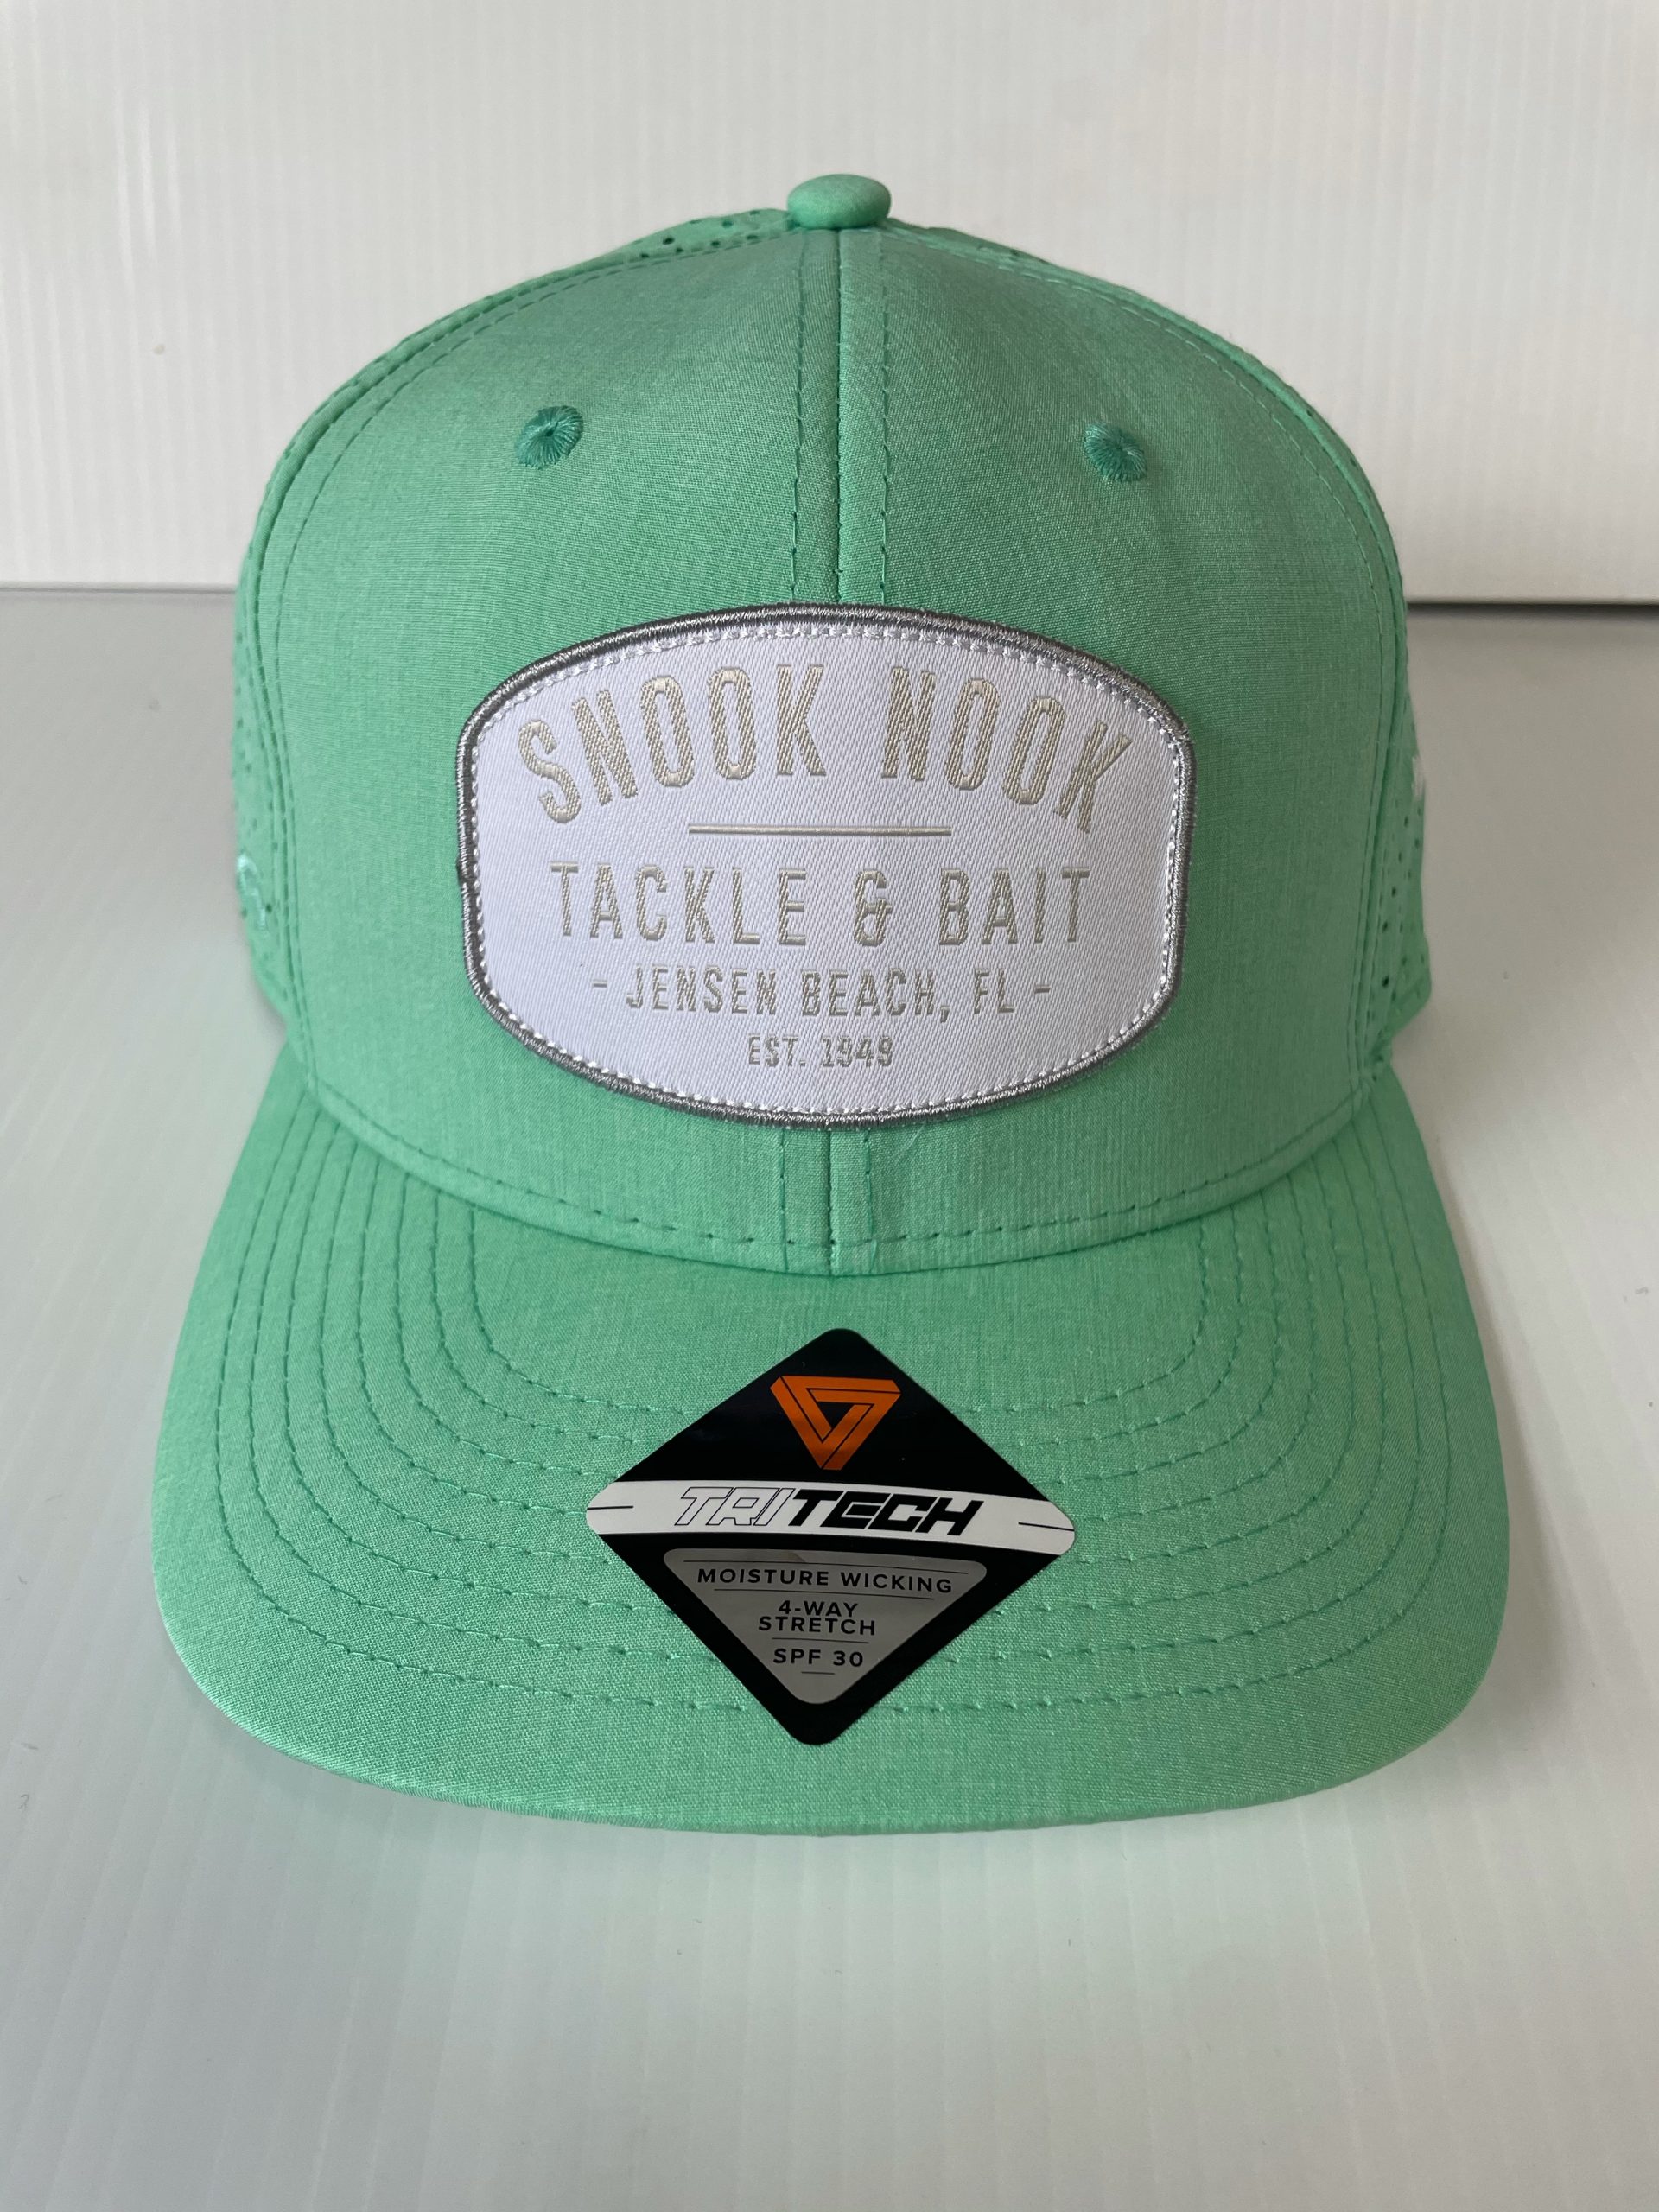 Snook Nook Tackle & Bait Mesh Snapback - Snook Nook Bait & Tackle